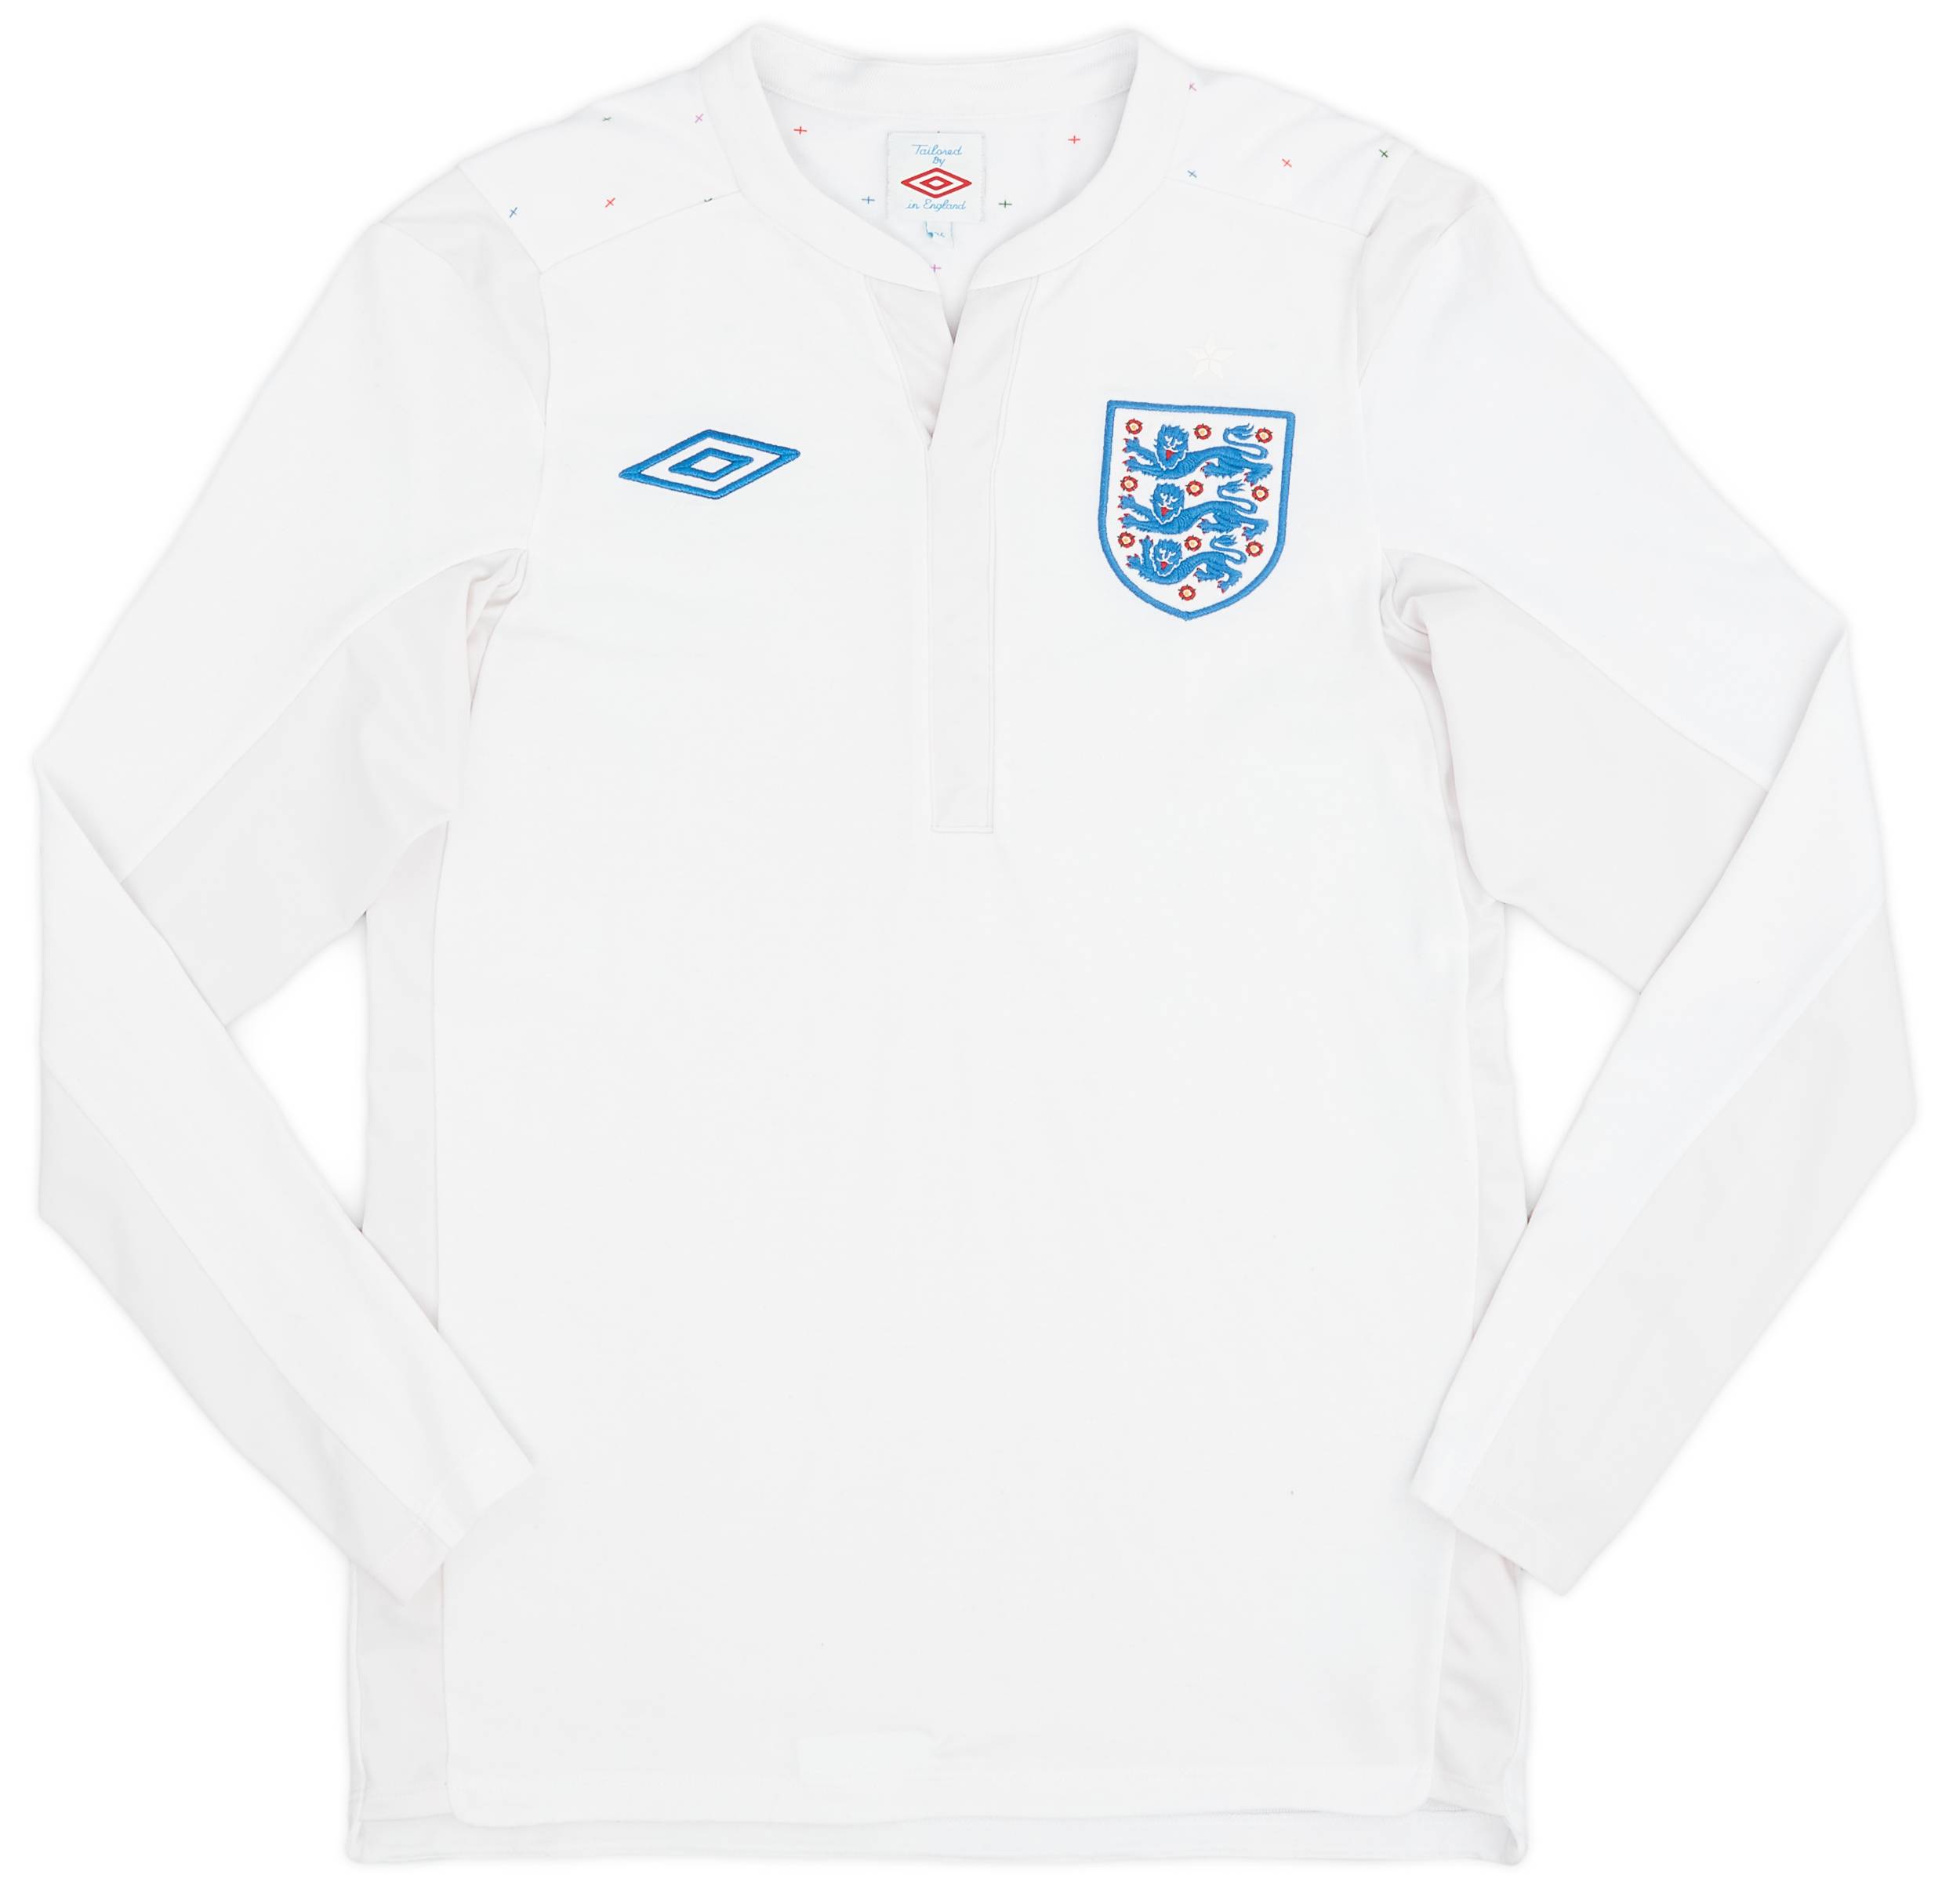 2010-11 England Home L/S Shirt - 8/10 - (XS)